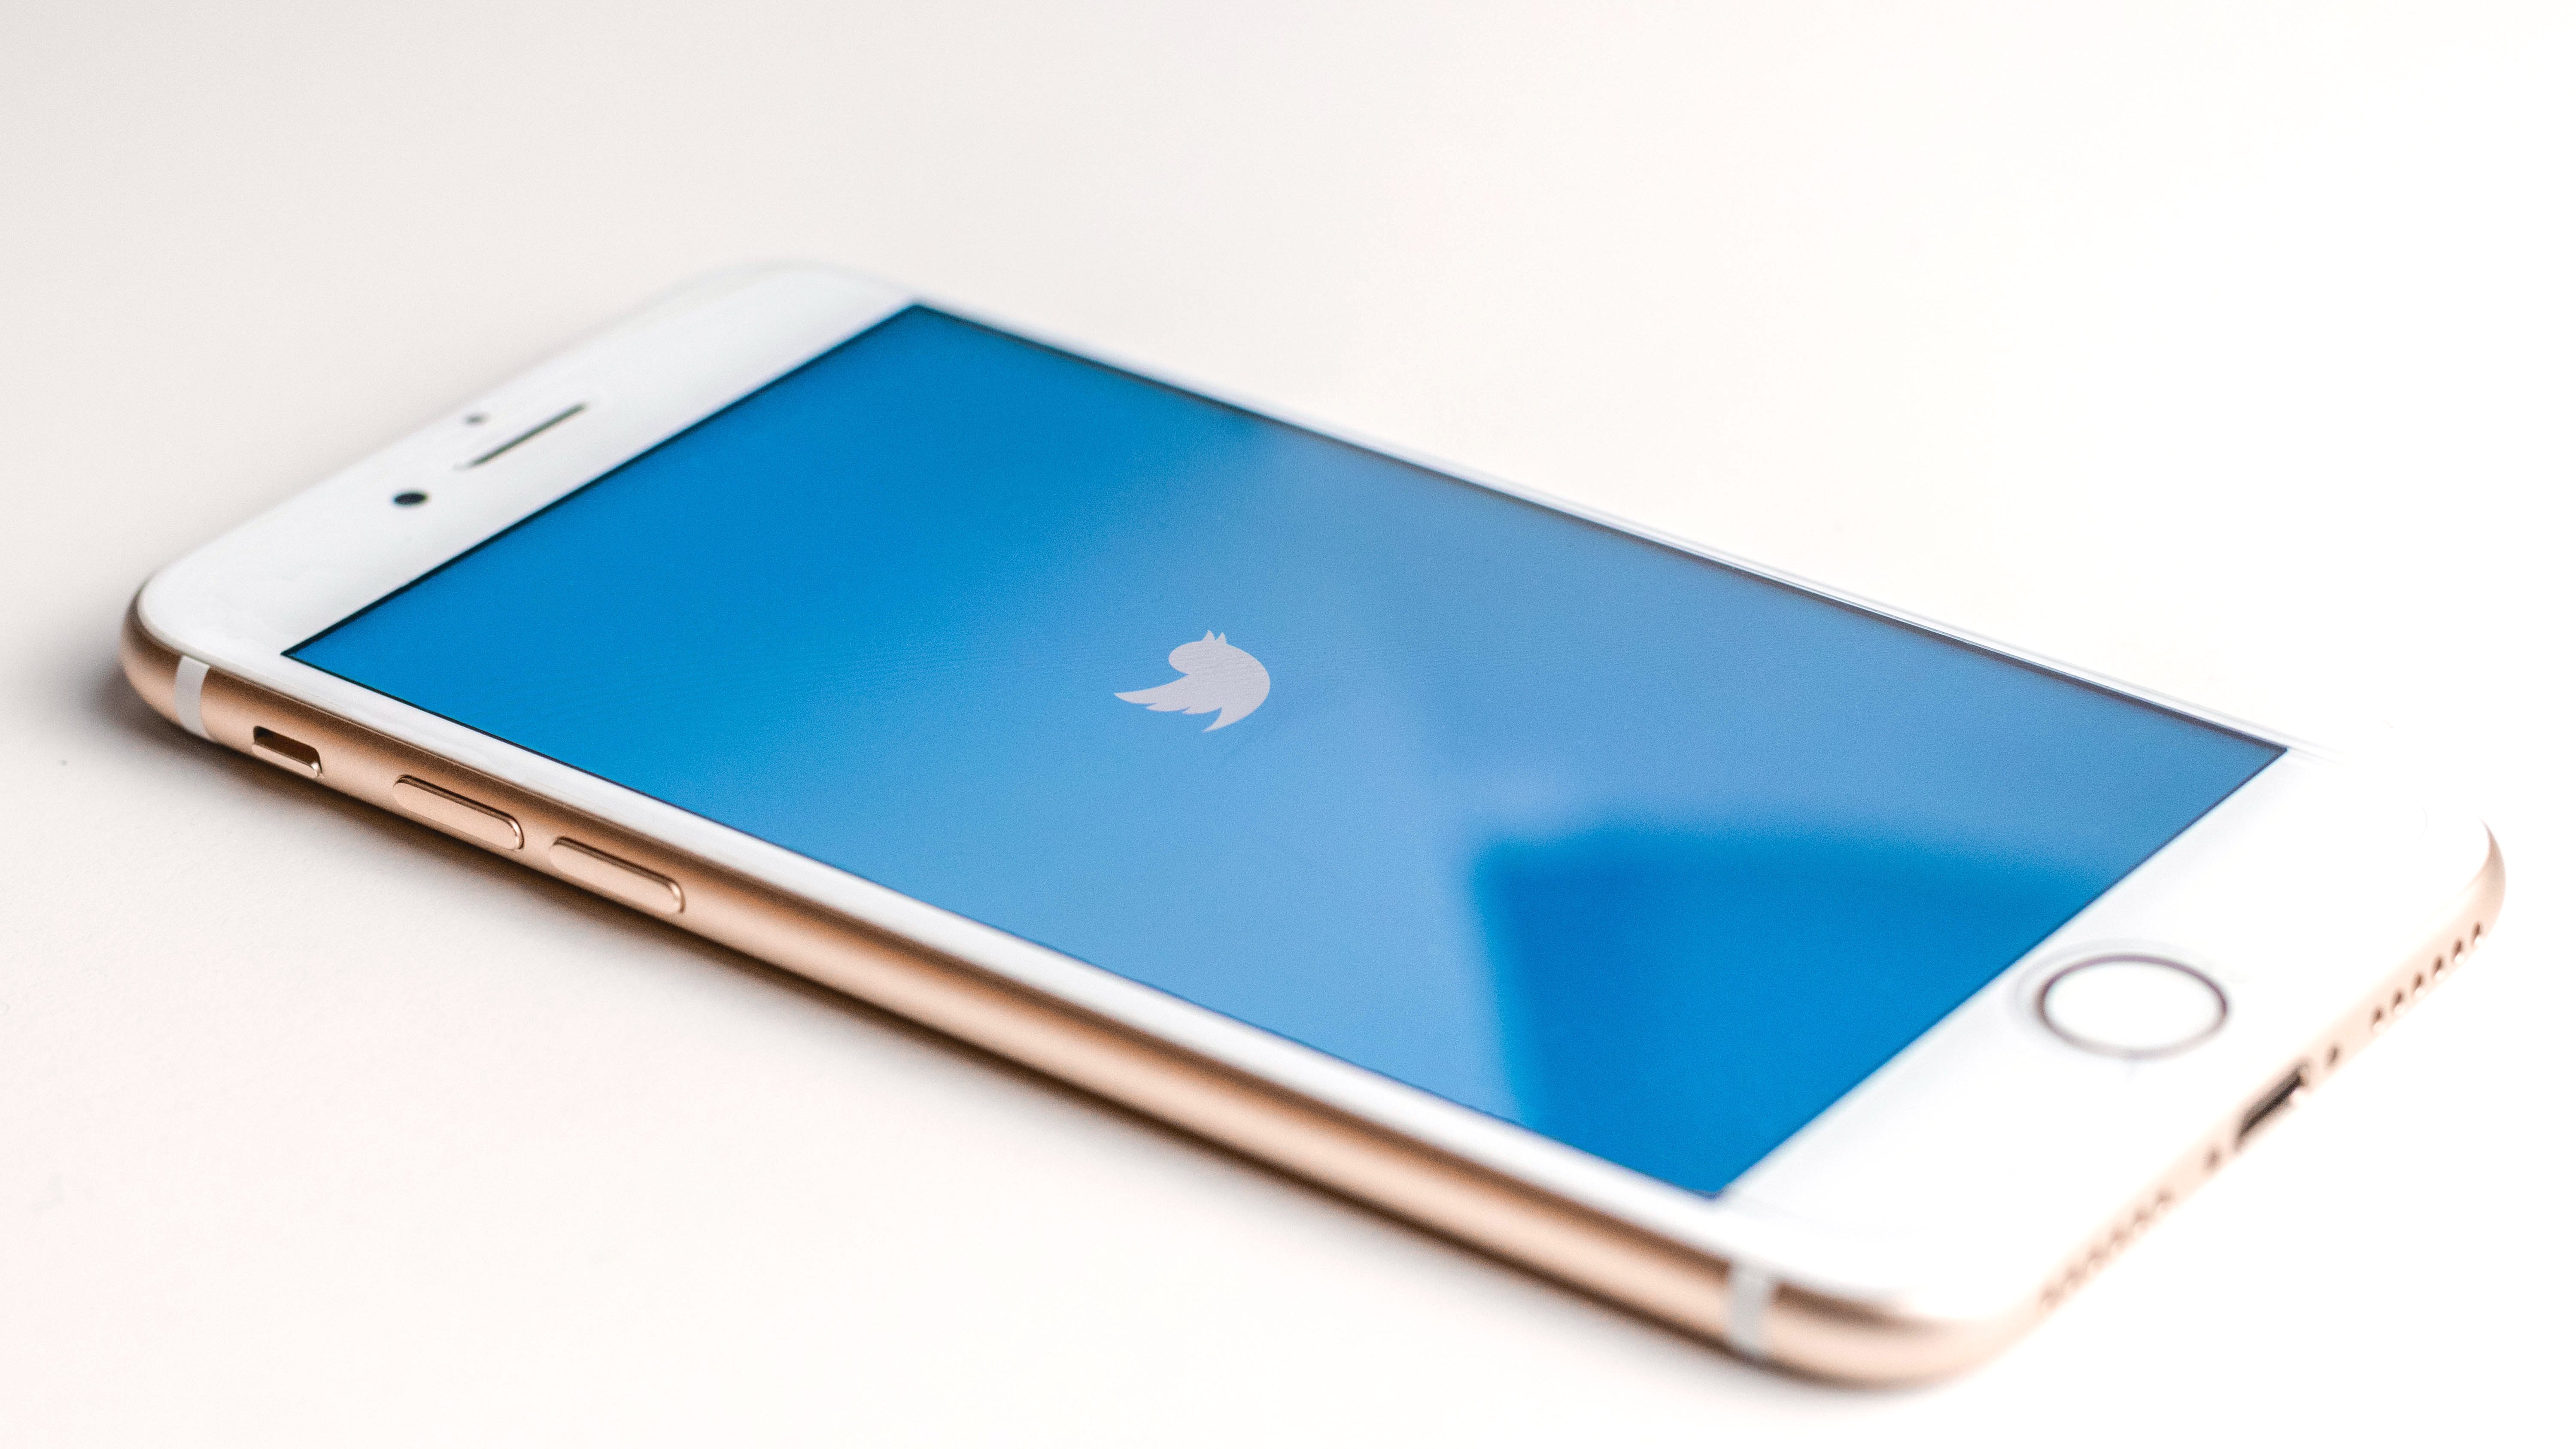 The Anatomy of an Engaging Marketing Tweet